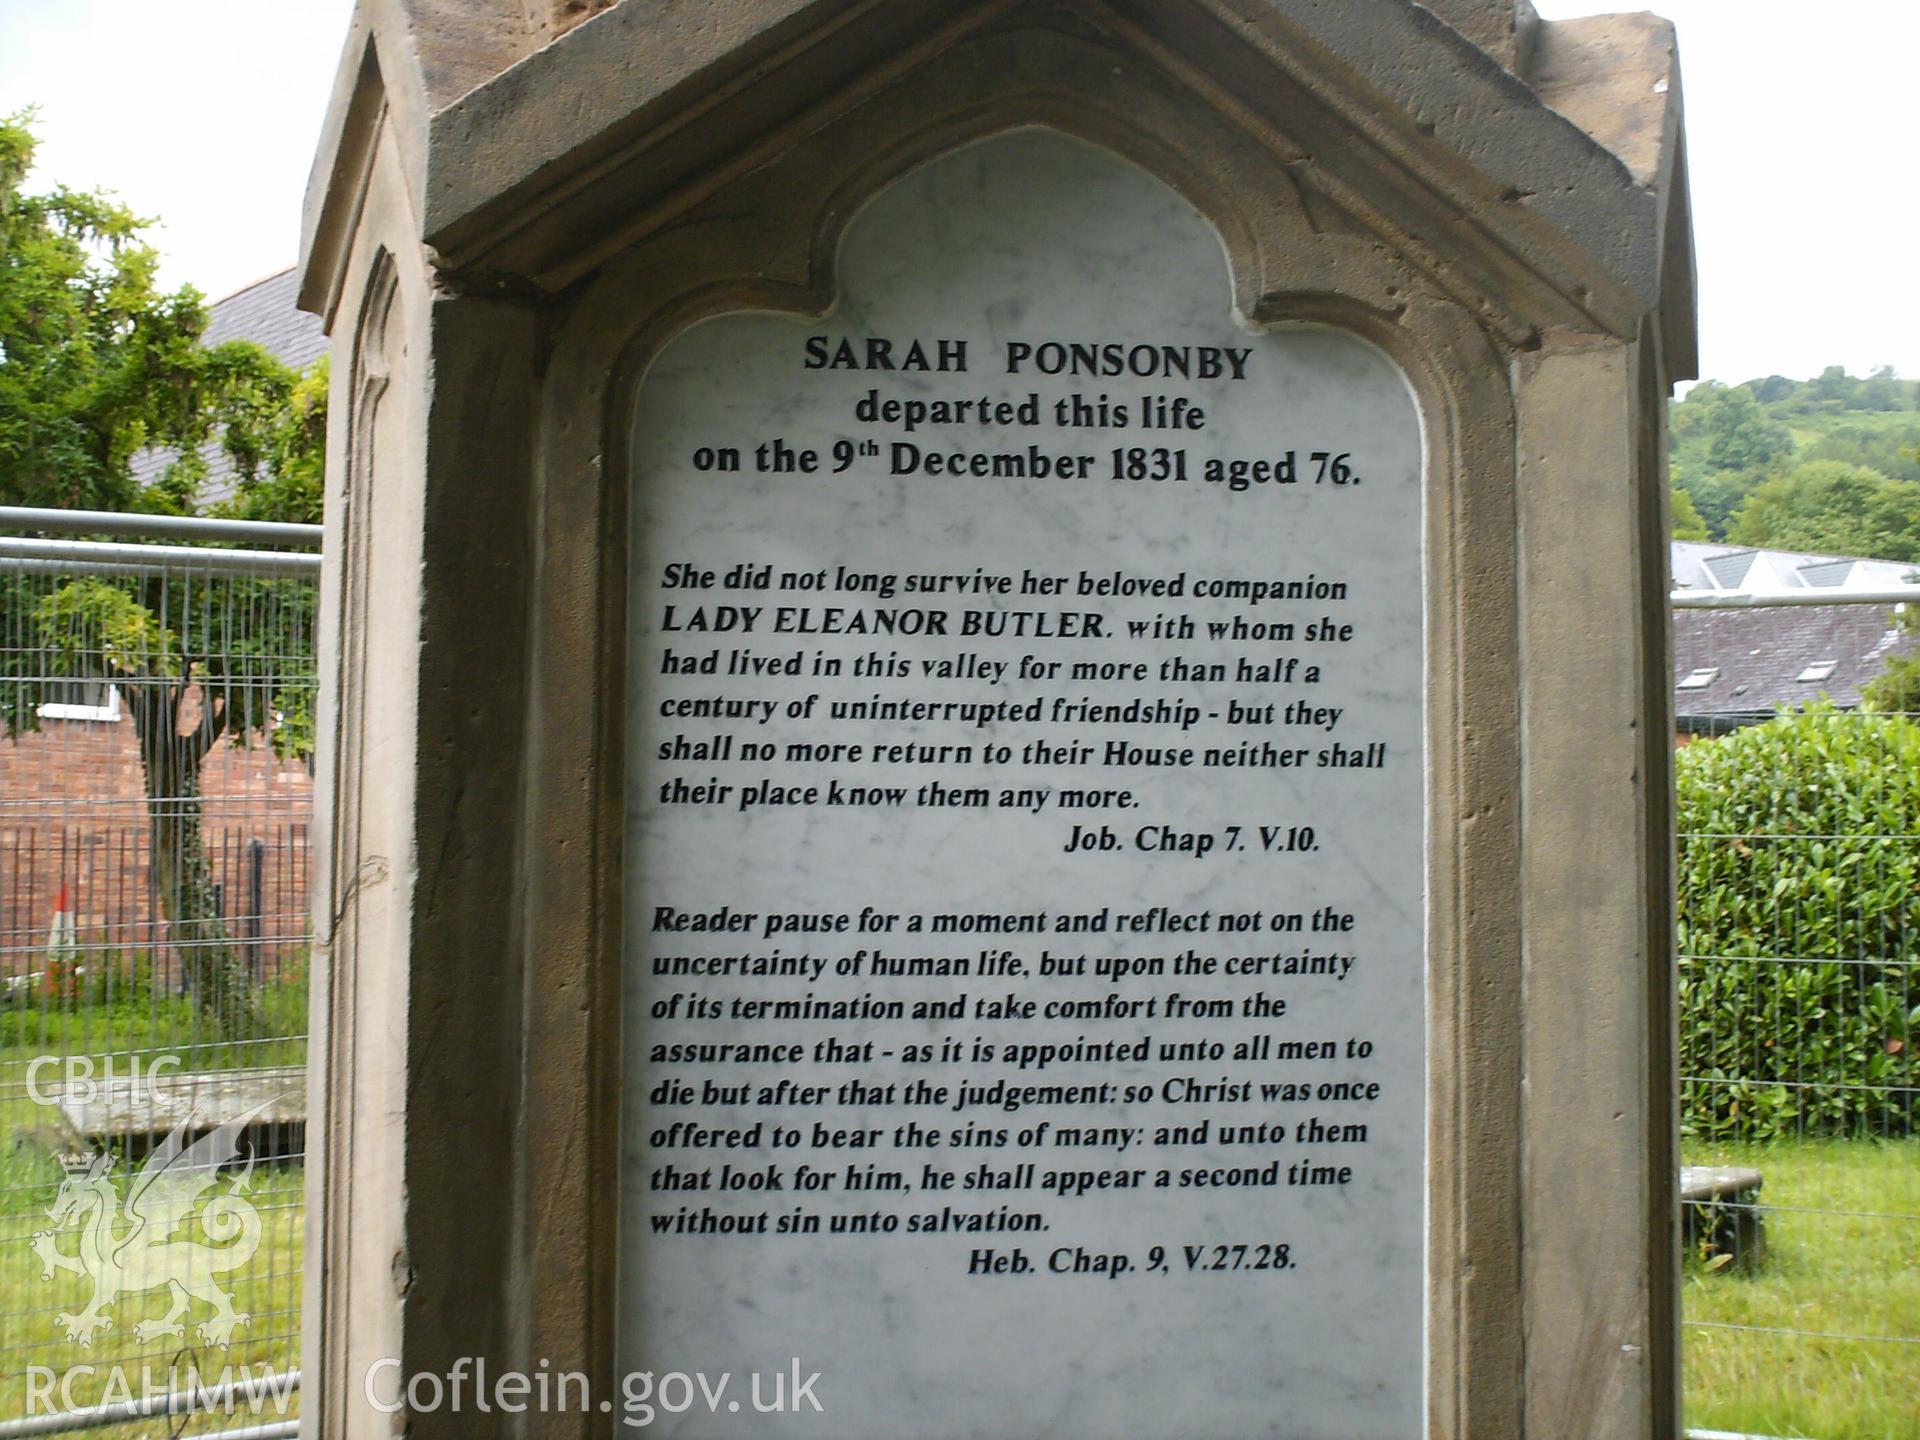 Digital image showing replica memorial plaque for Sarah Ponsonby.